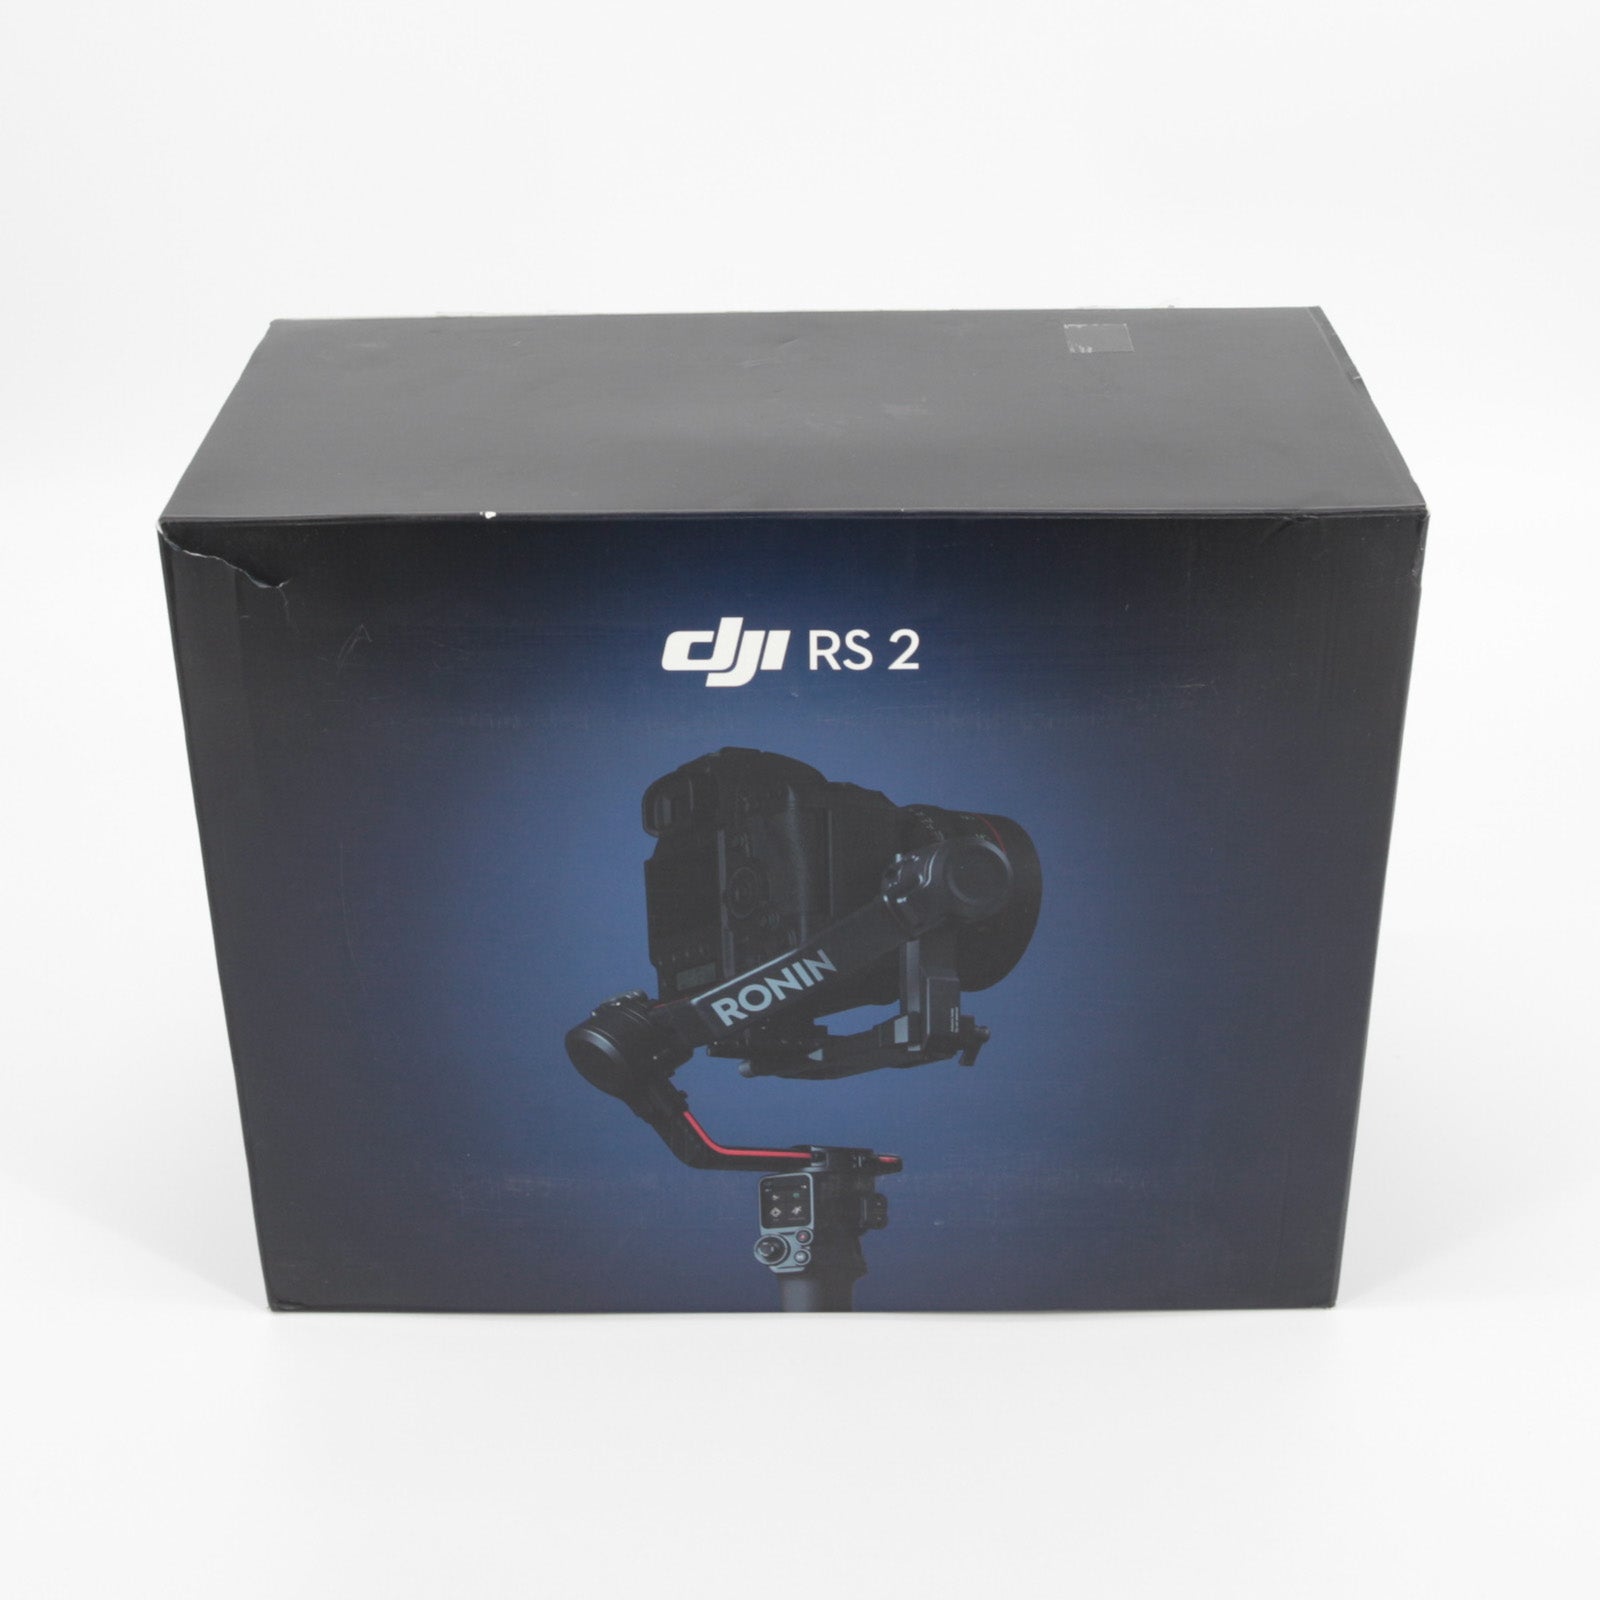 DJI RS 2 Gimbal 3-axis camera Stabiliser Kit for DSLR Cameras